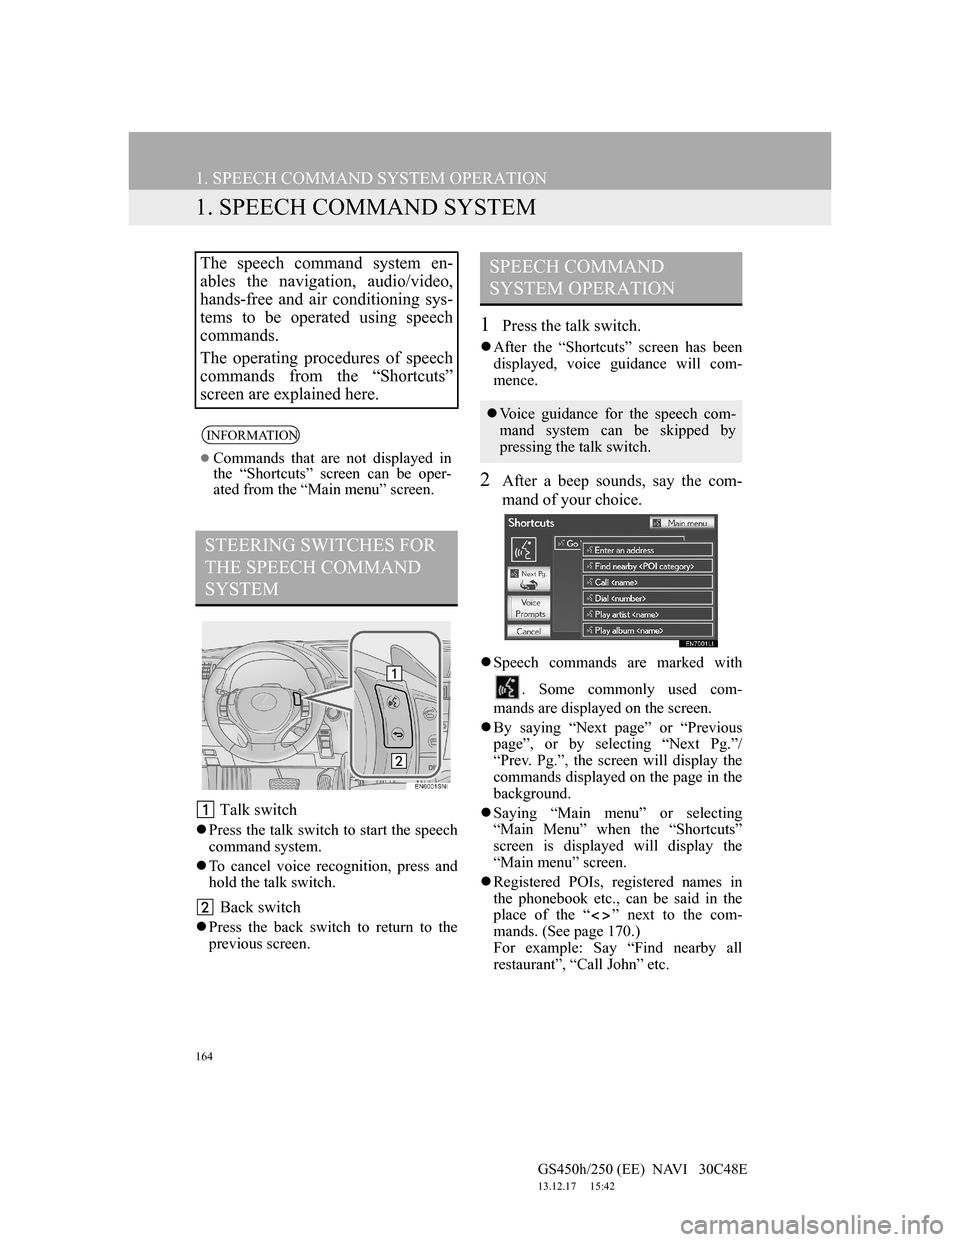 Lexus GS450h 2012  Navigation manual 164
GS450h/250 (EE)  NAVI   30C48E
13.12.17     15:42
1. SPEECH COMMAND SYSTEM OPERATION
1. SPEECH COMMAND SYSTEM
 Talk switch
Press the talk switch to start the speech
command system.
To cancel